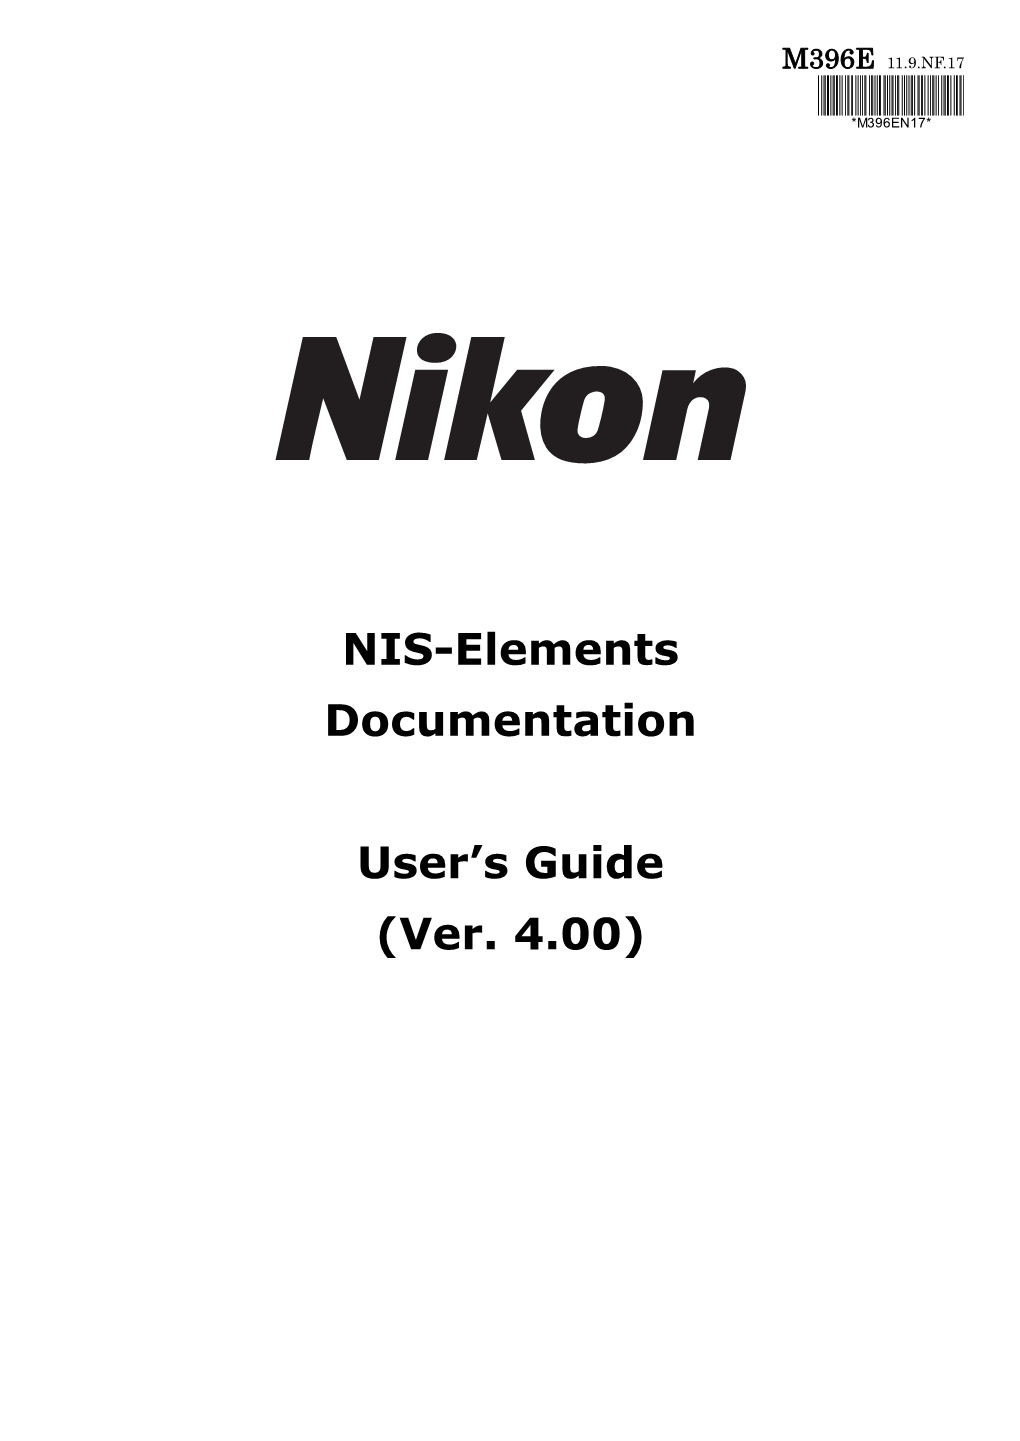 NIS-Elements Documentation User's Guide (Ver. 4.00)